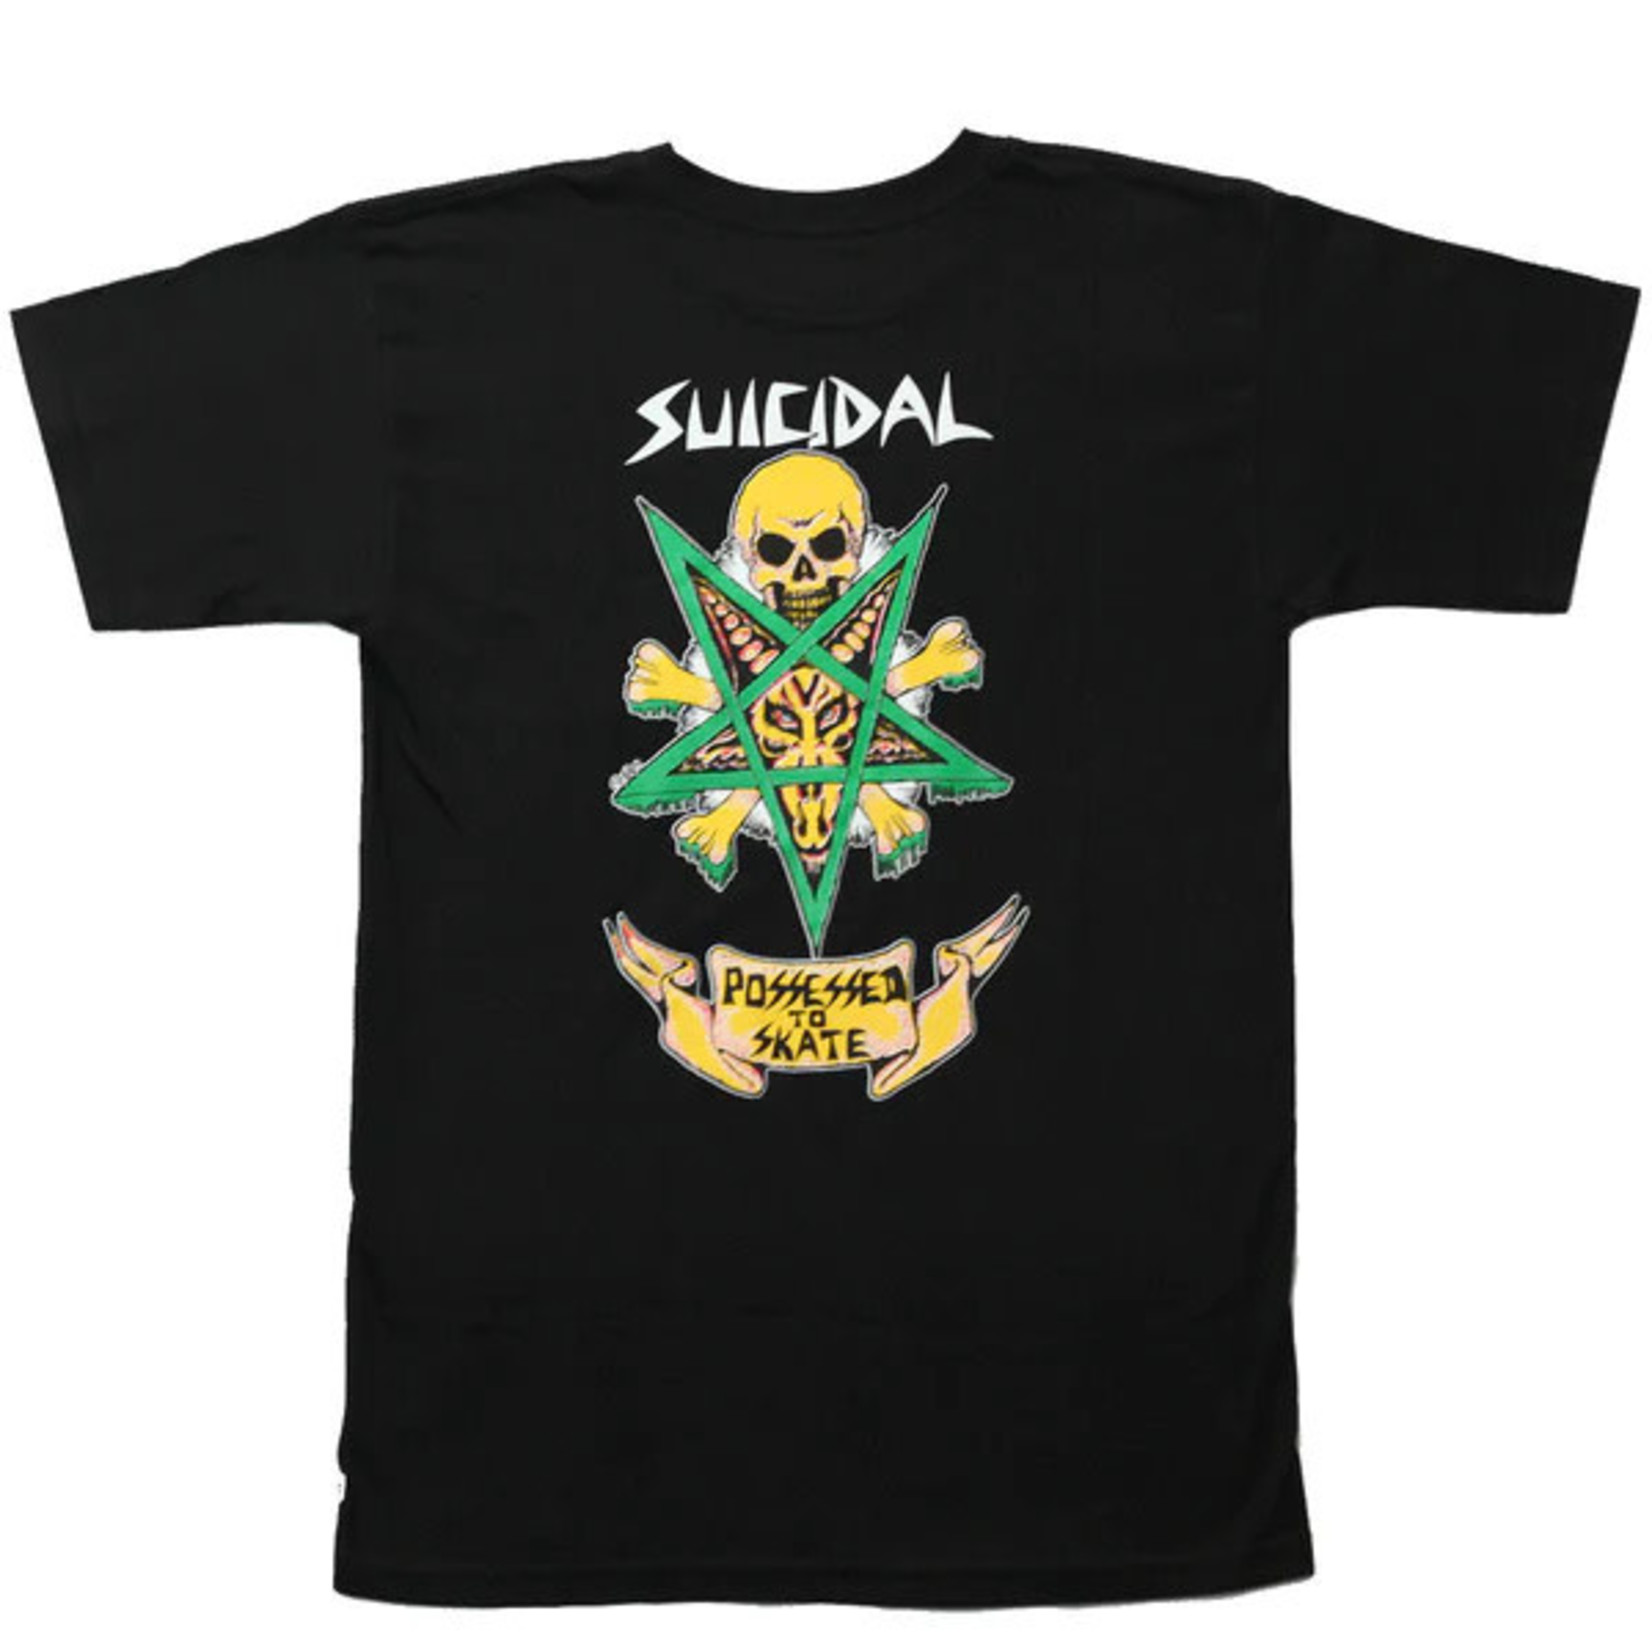 Suicidal Skates Suicidal Skates Possessed to Skate T-Shirt - Black